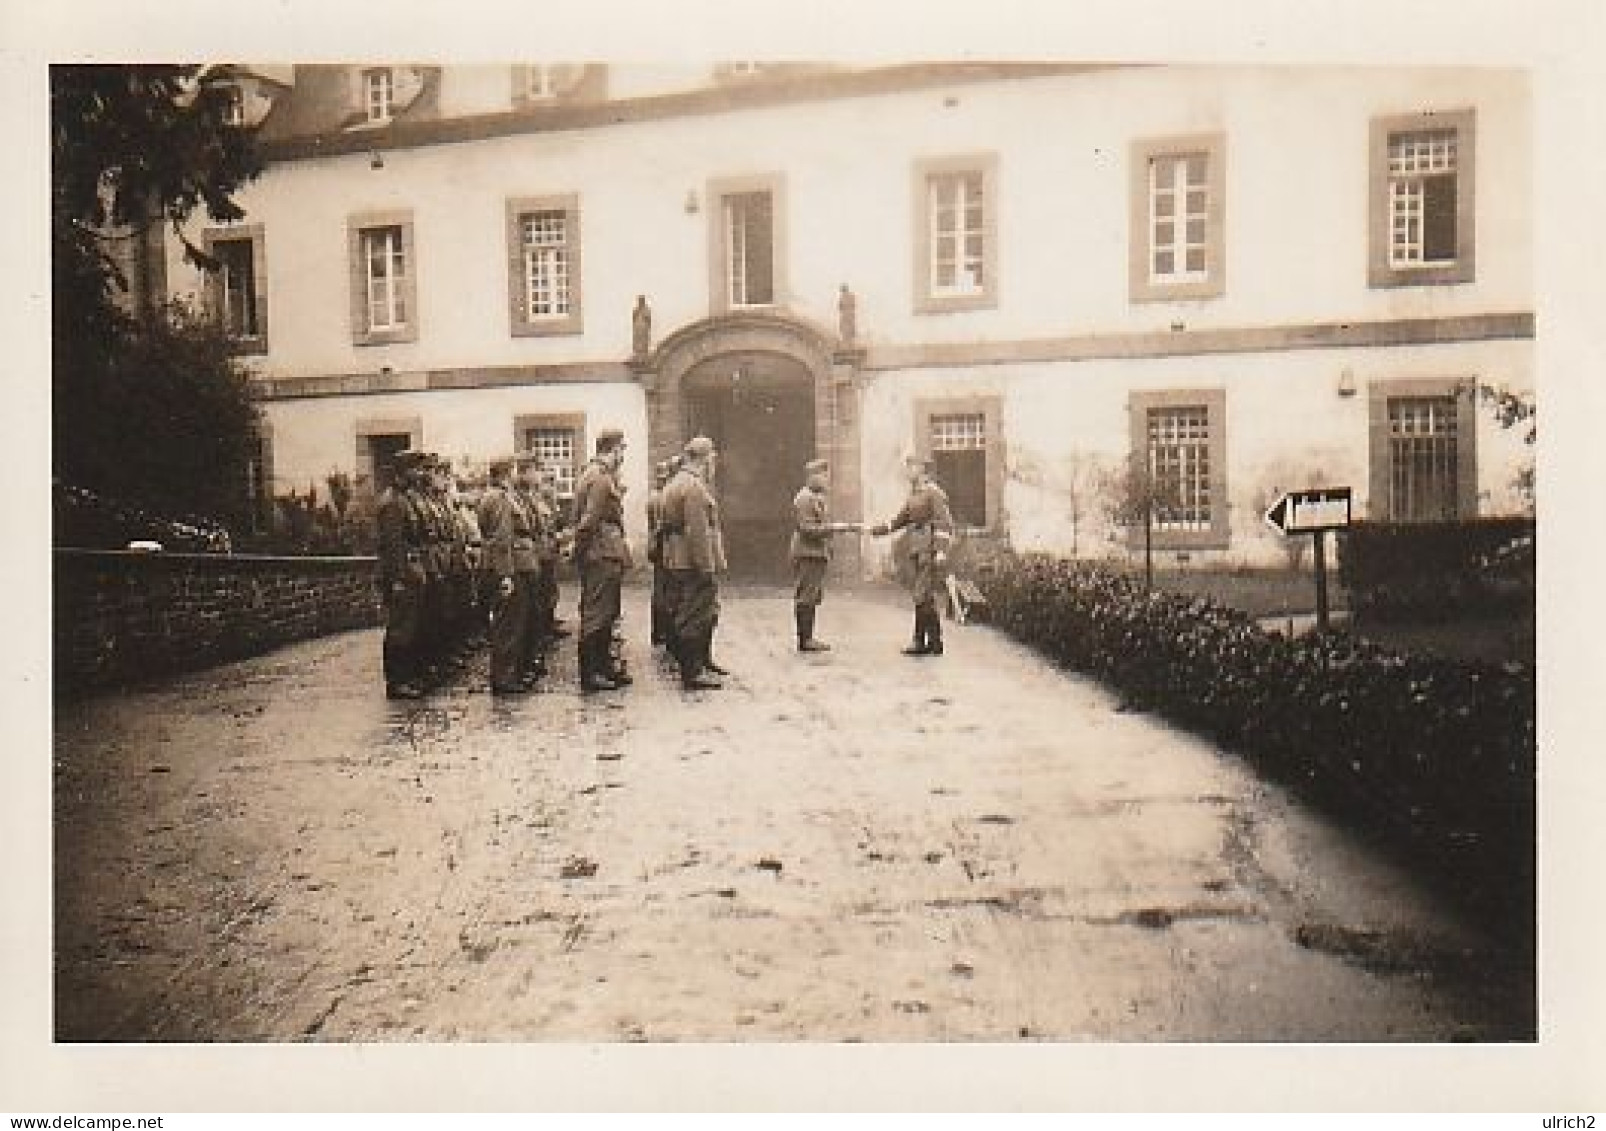 Foto Gruppe Deutsche Soldaten Angetreten - Appell - 2. WK - 8*5cm  (69012) - War, Military